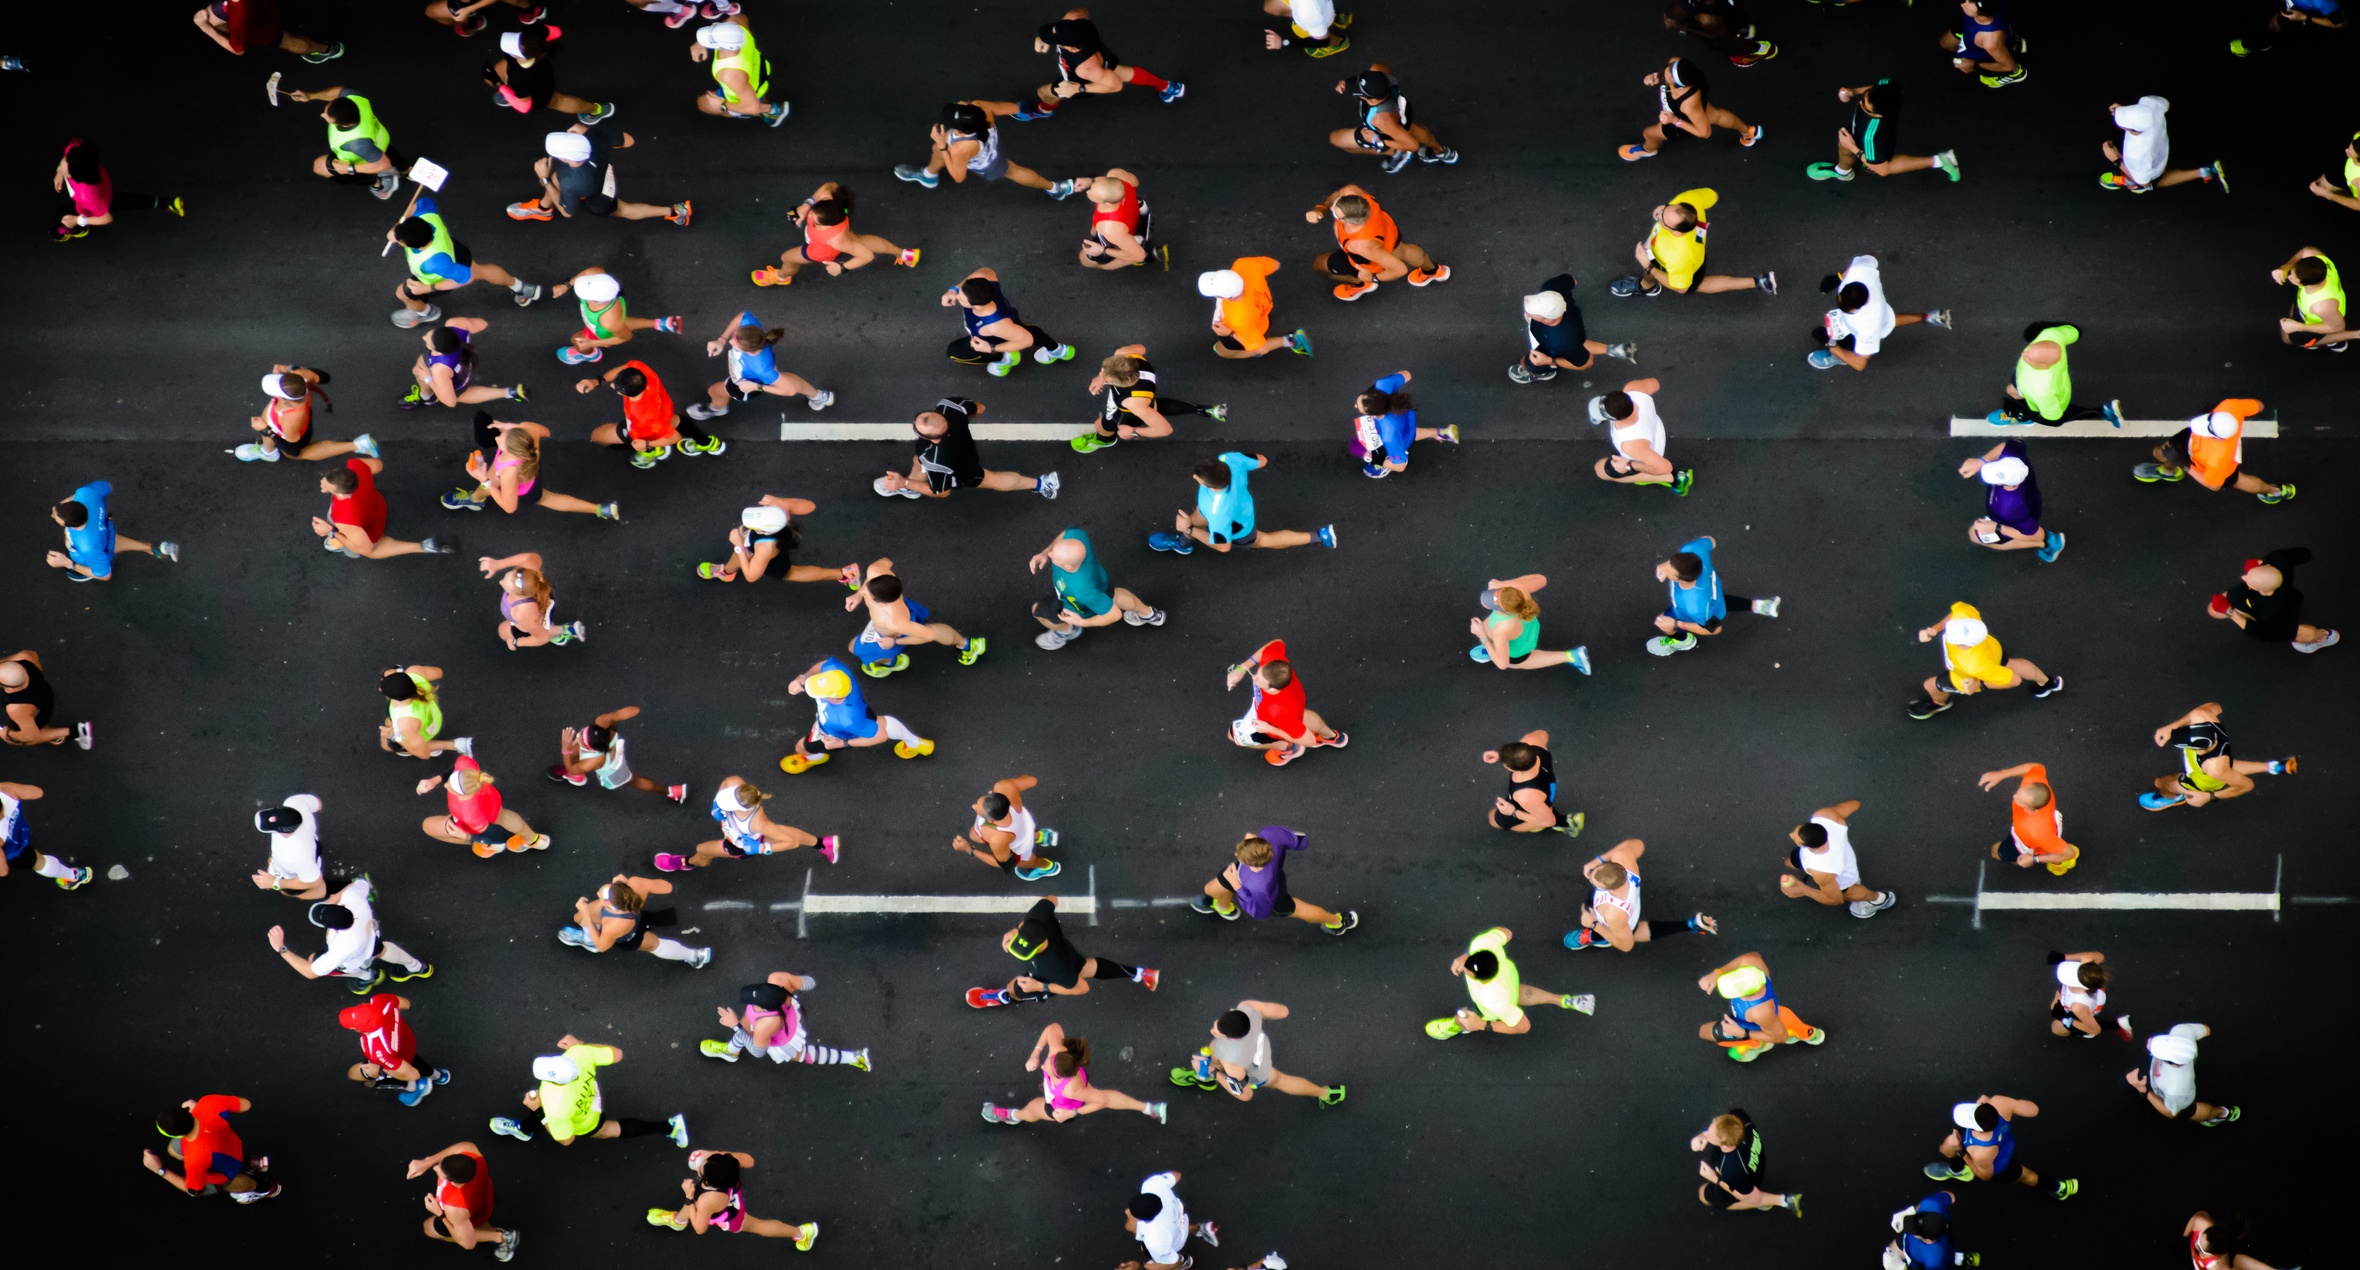 Benefits and keys to preparing well a marathon